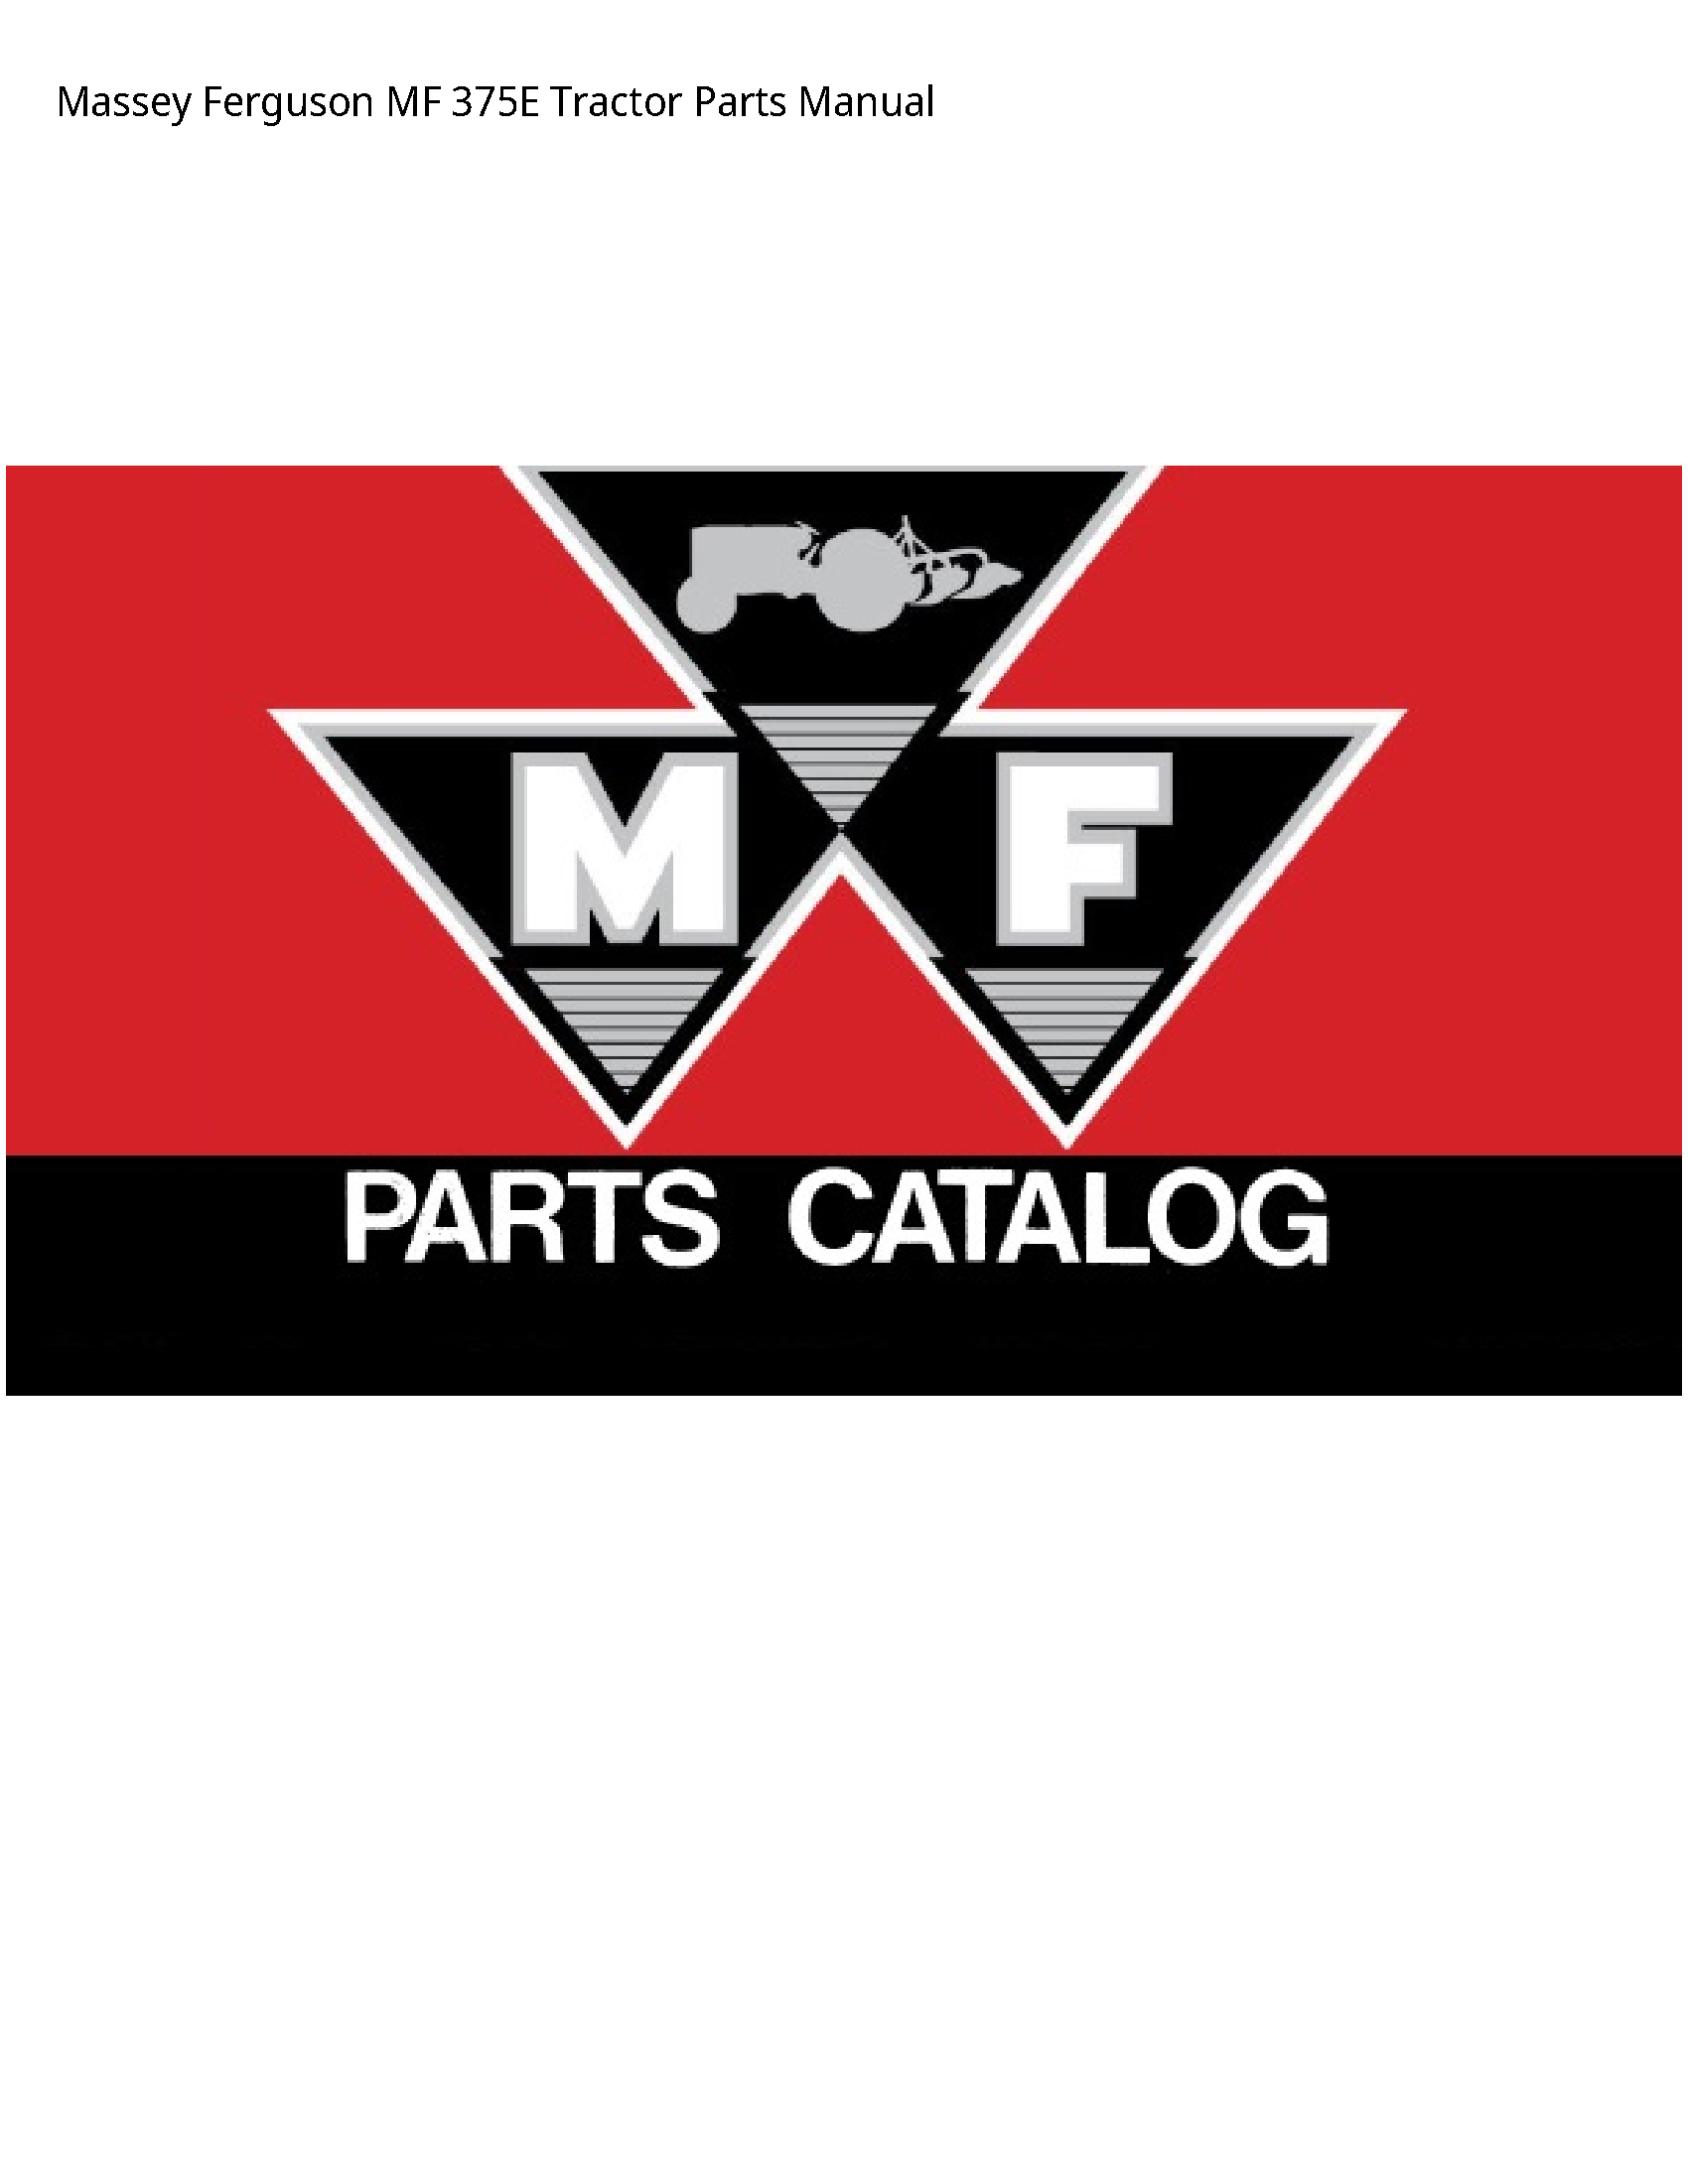 Massey Ferguson 375E MF Tractor Parts manual